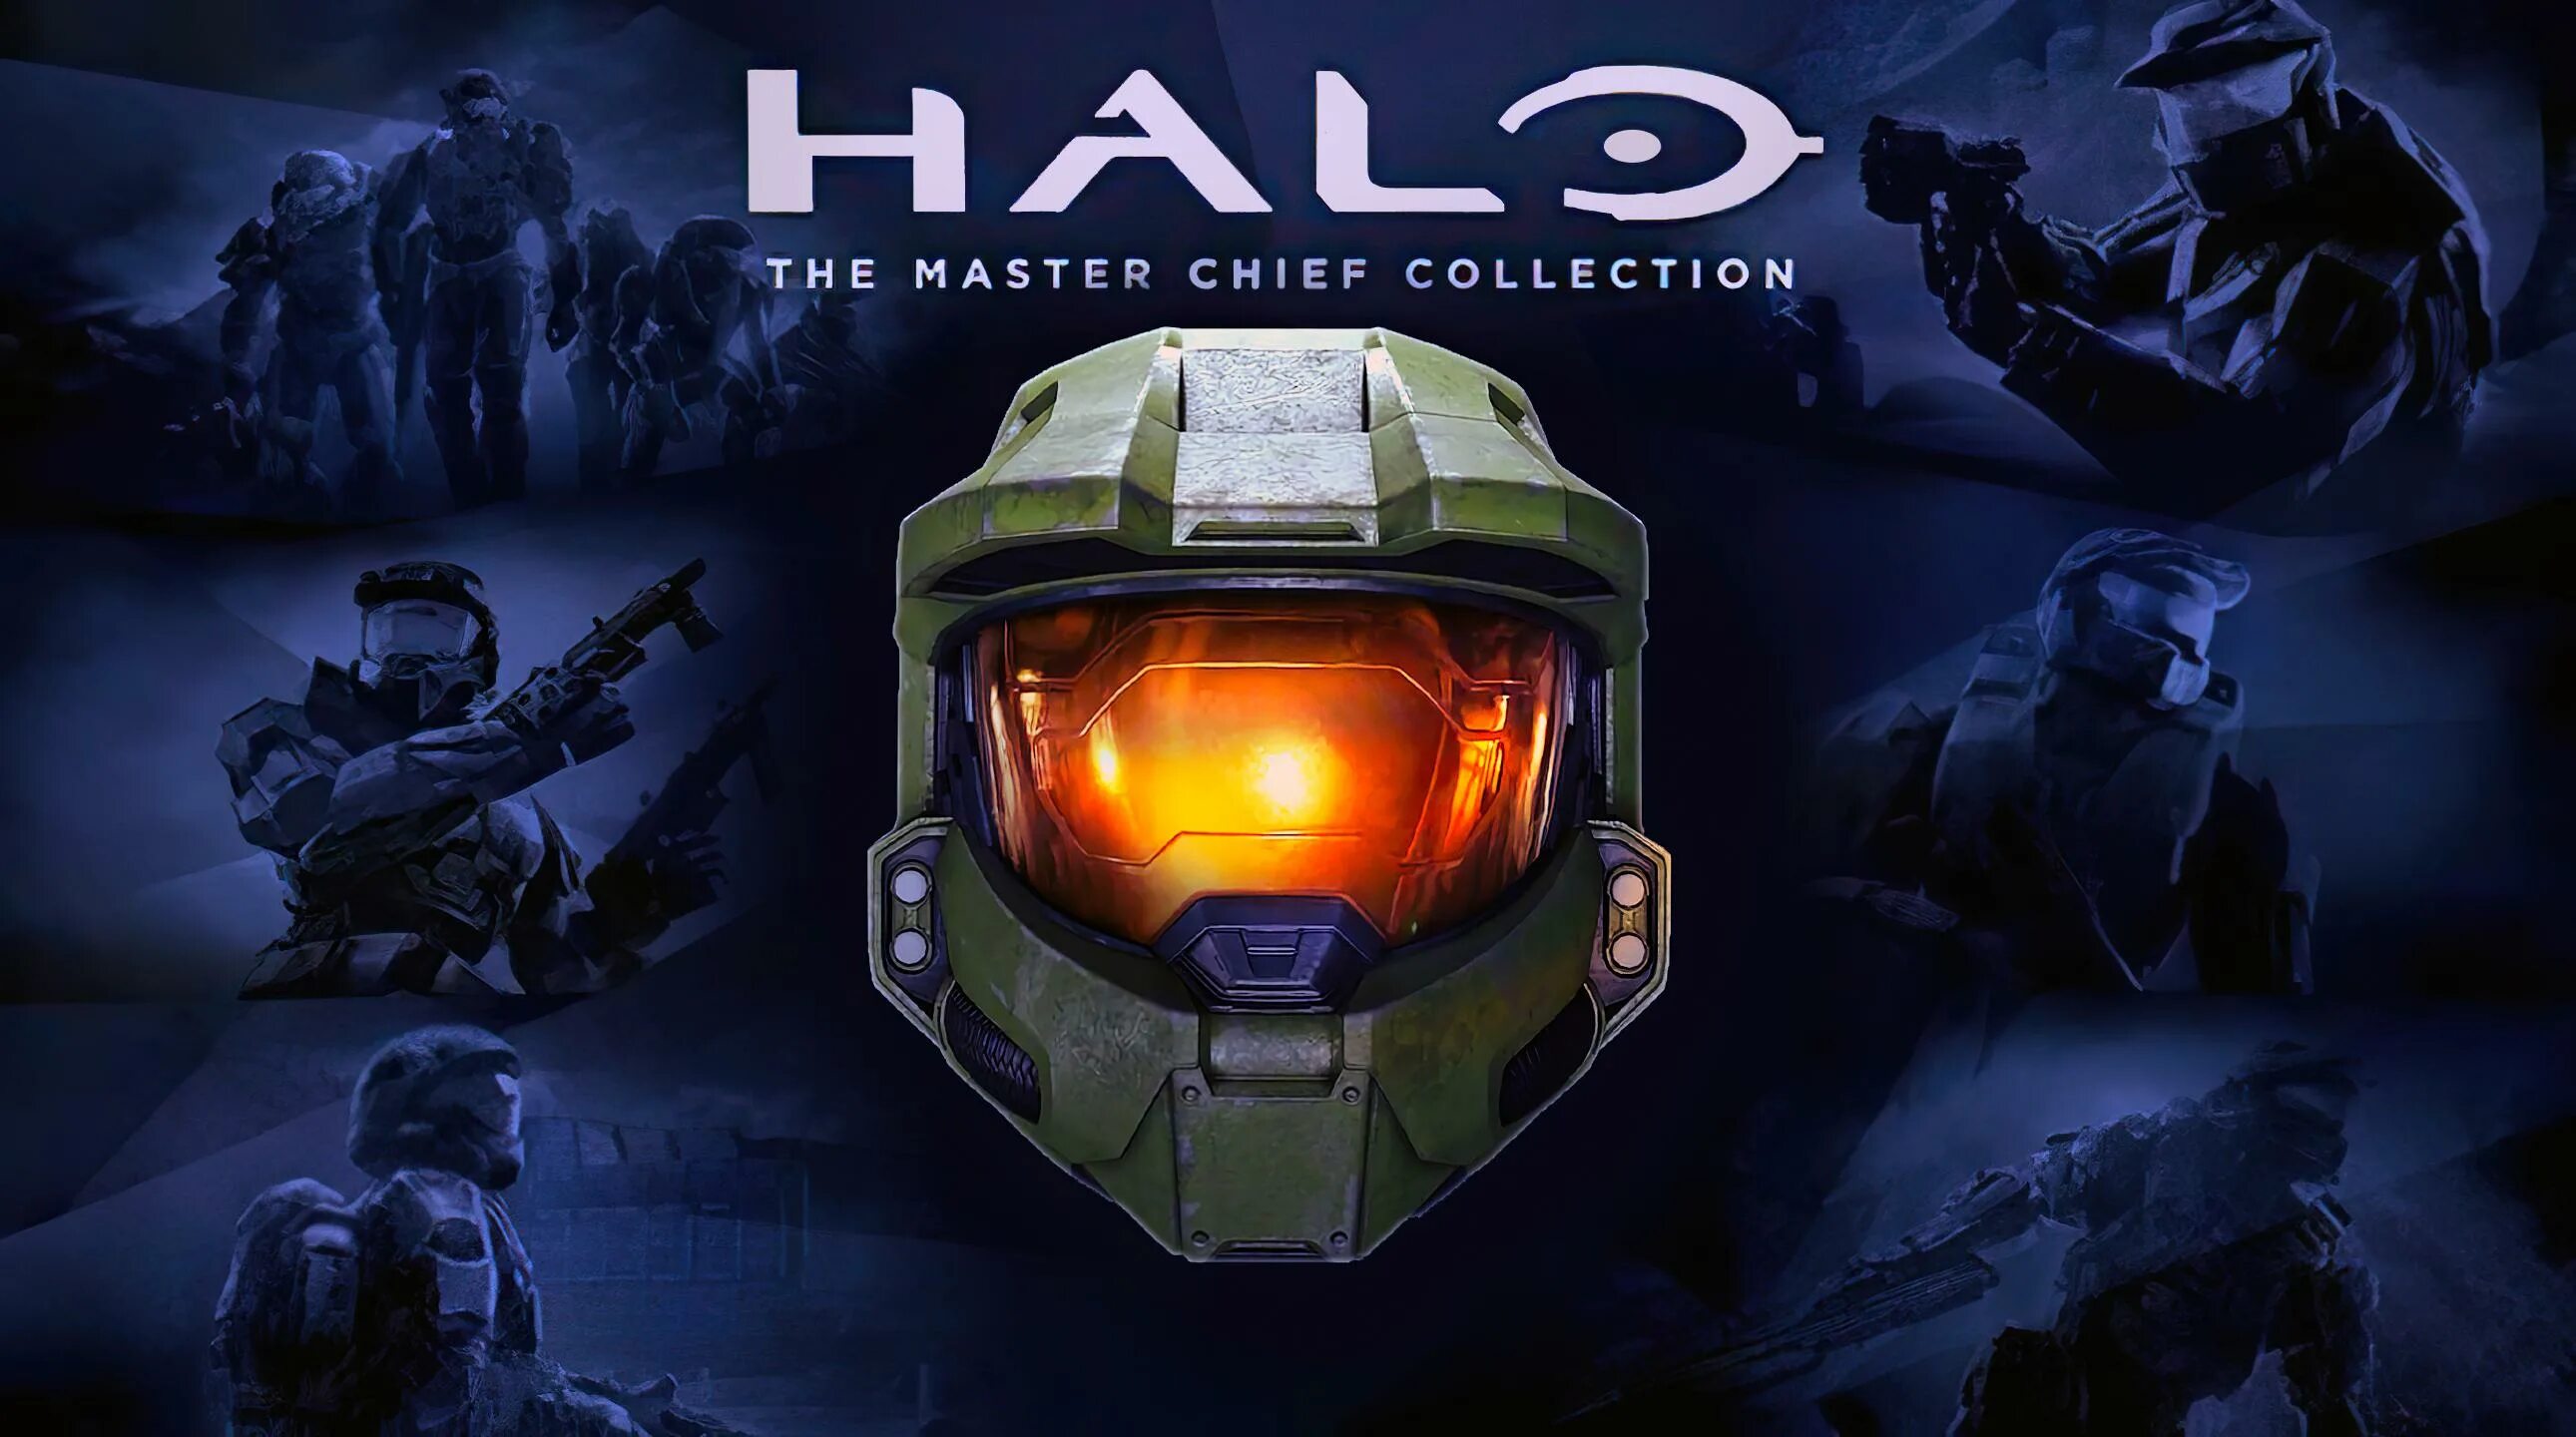 Halo мастер Чиф collection. Мастер Чиф Halo 2. Halo Master Chief collection обложка. Halo 2 мастер Чиф обложка.